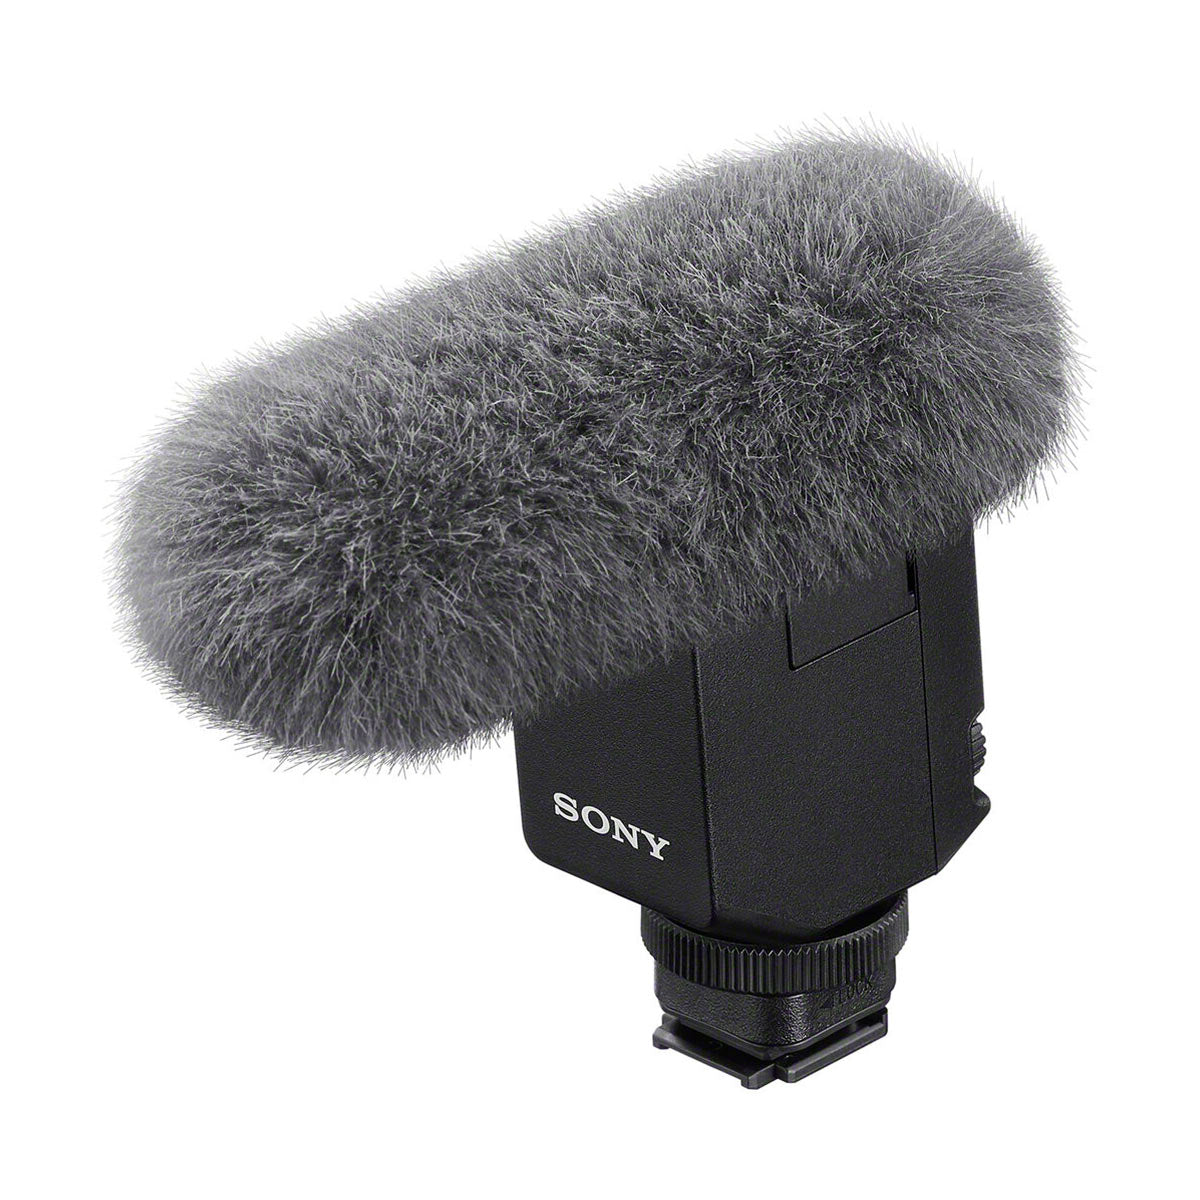 Sony ECM-B10 Compact Digital Shotgun Microphone